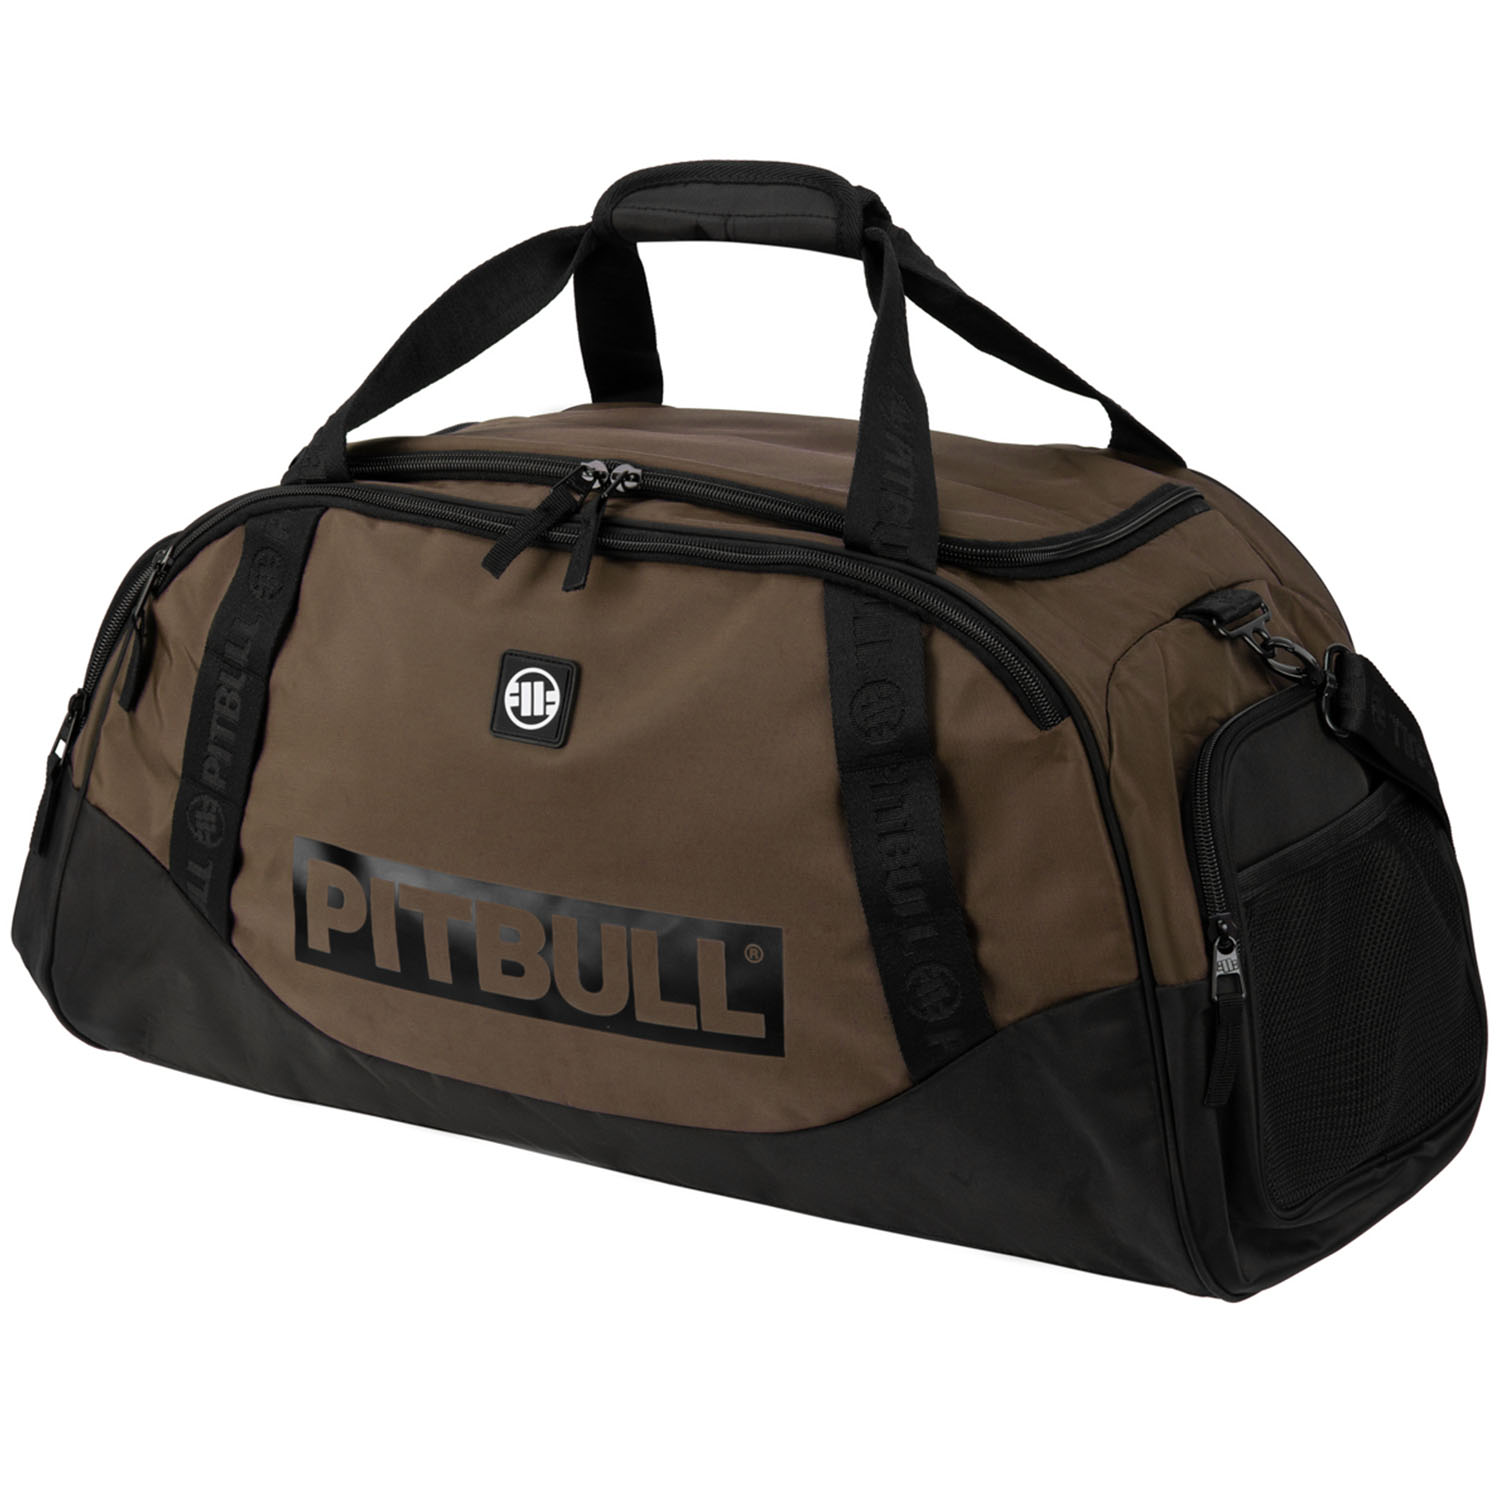 Pit Bull West Coast Gear Bag, Pitbull, black-brown